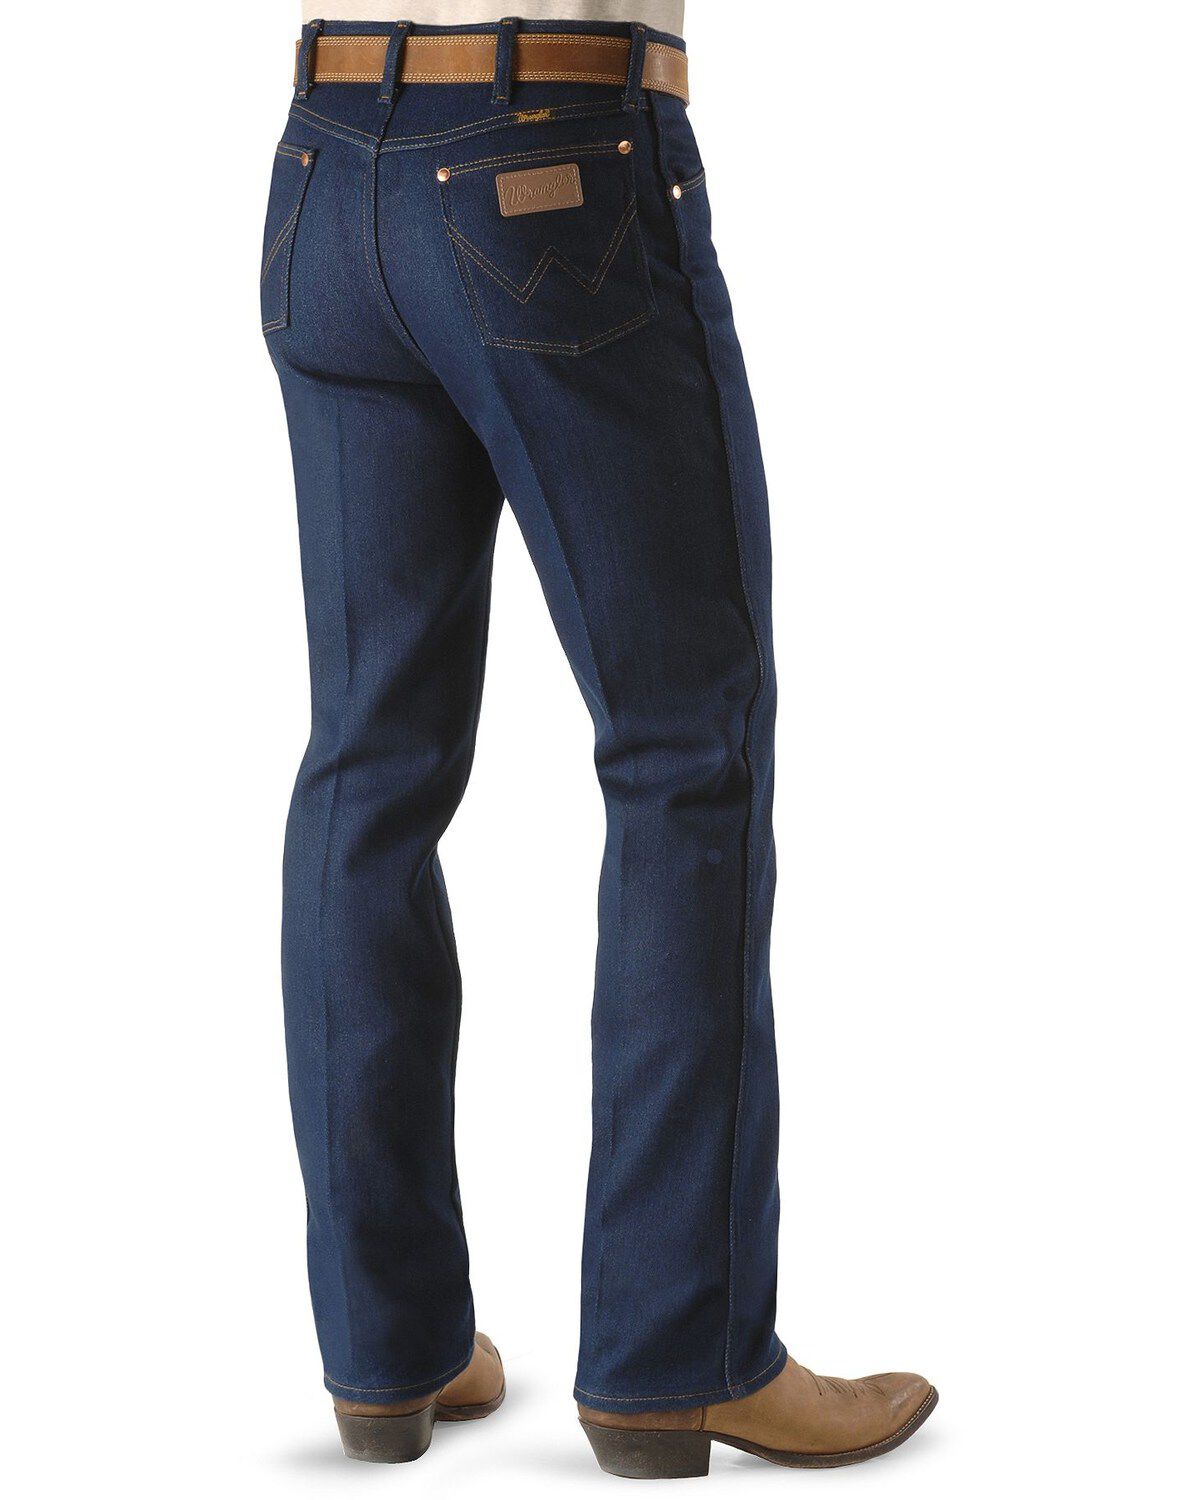 wrangler jeans 48 x 32